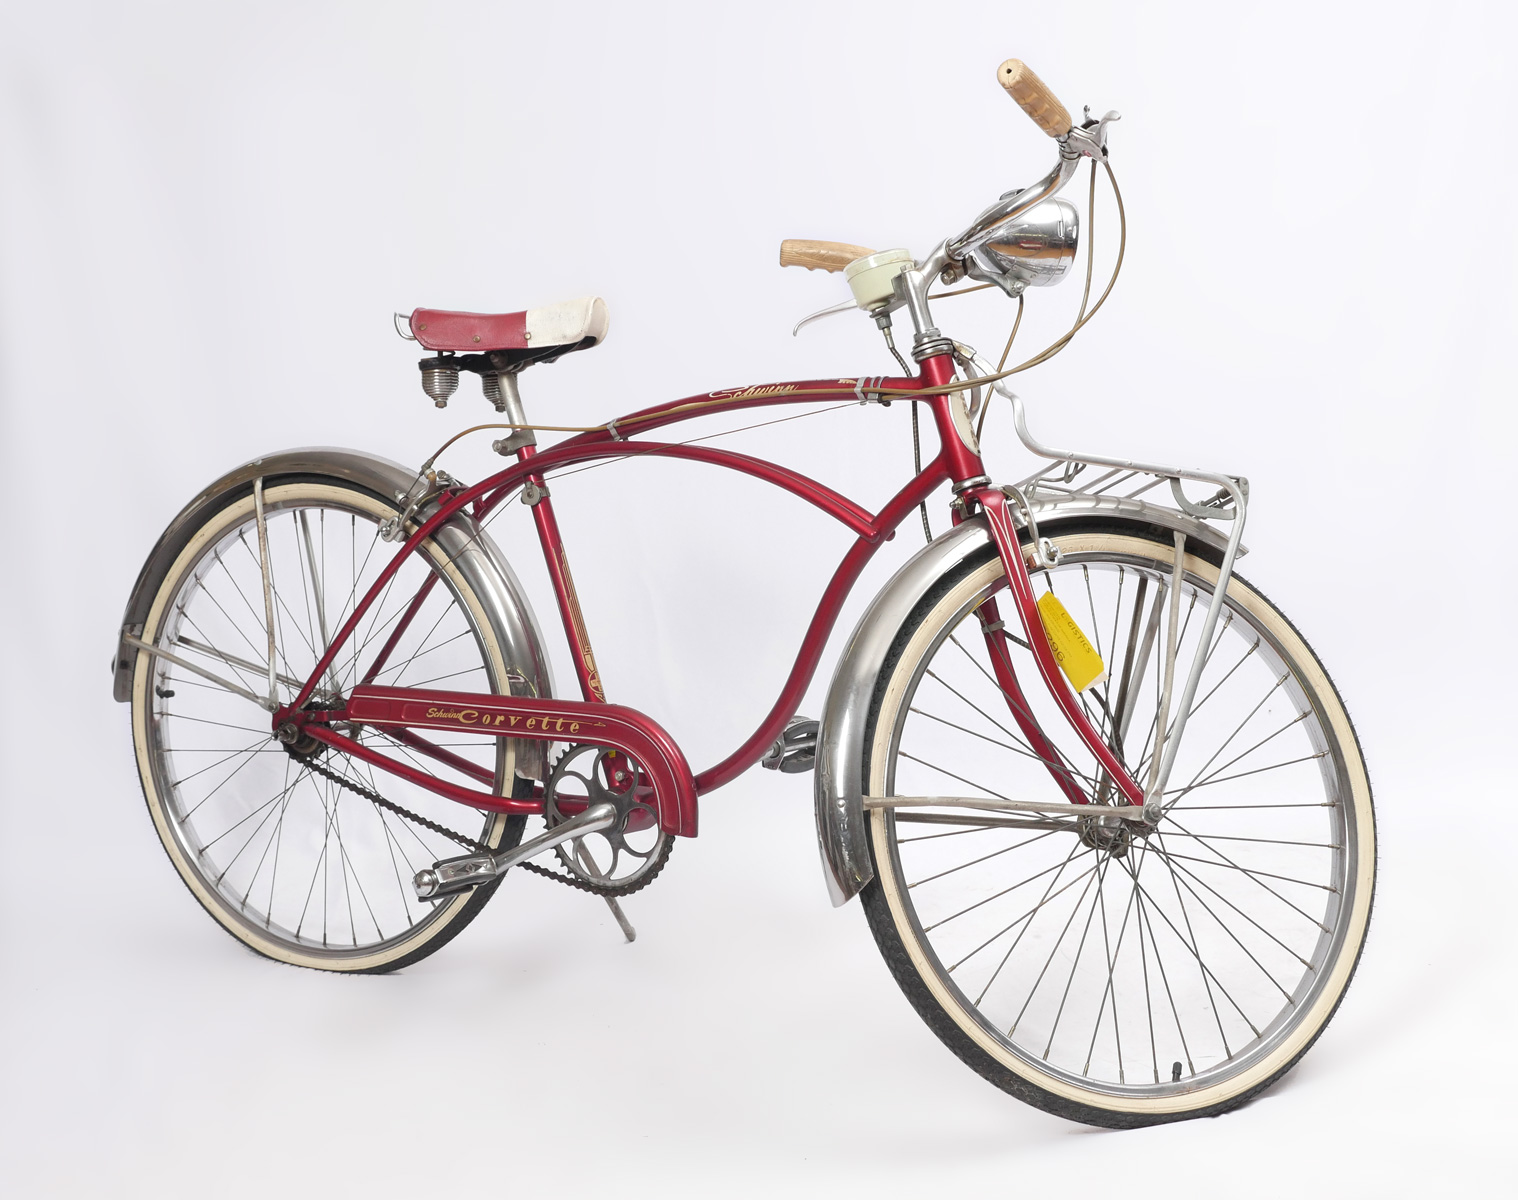 1958 SCHWINN CORVETTE BICYCLE: